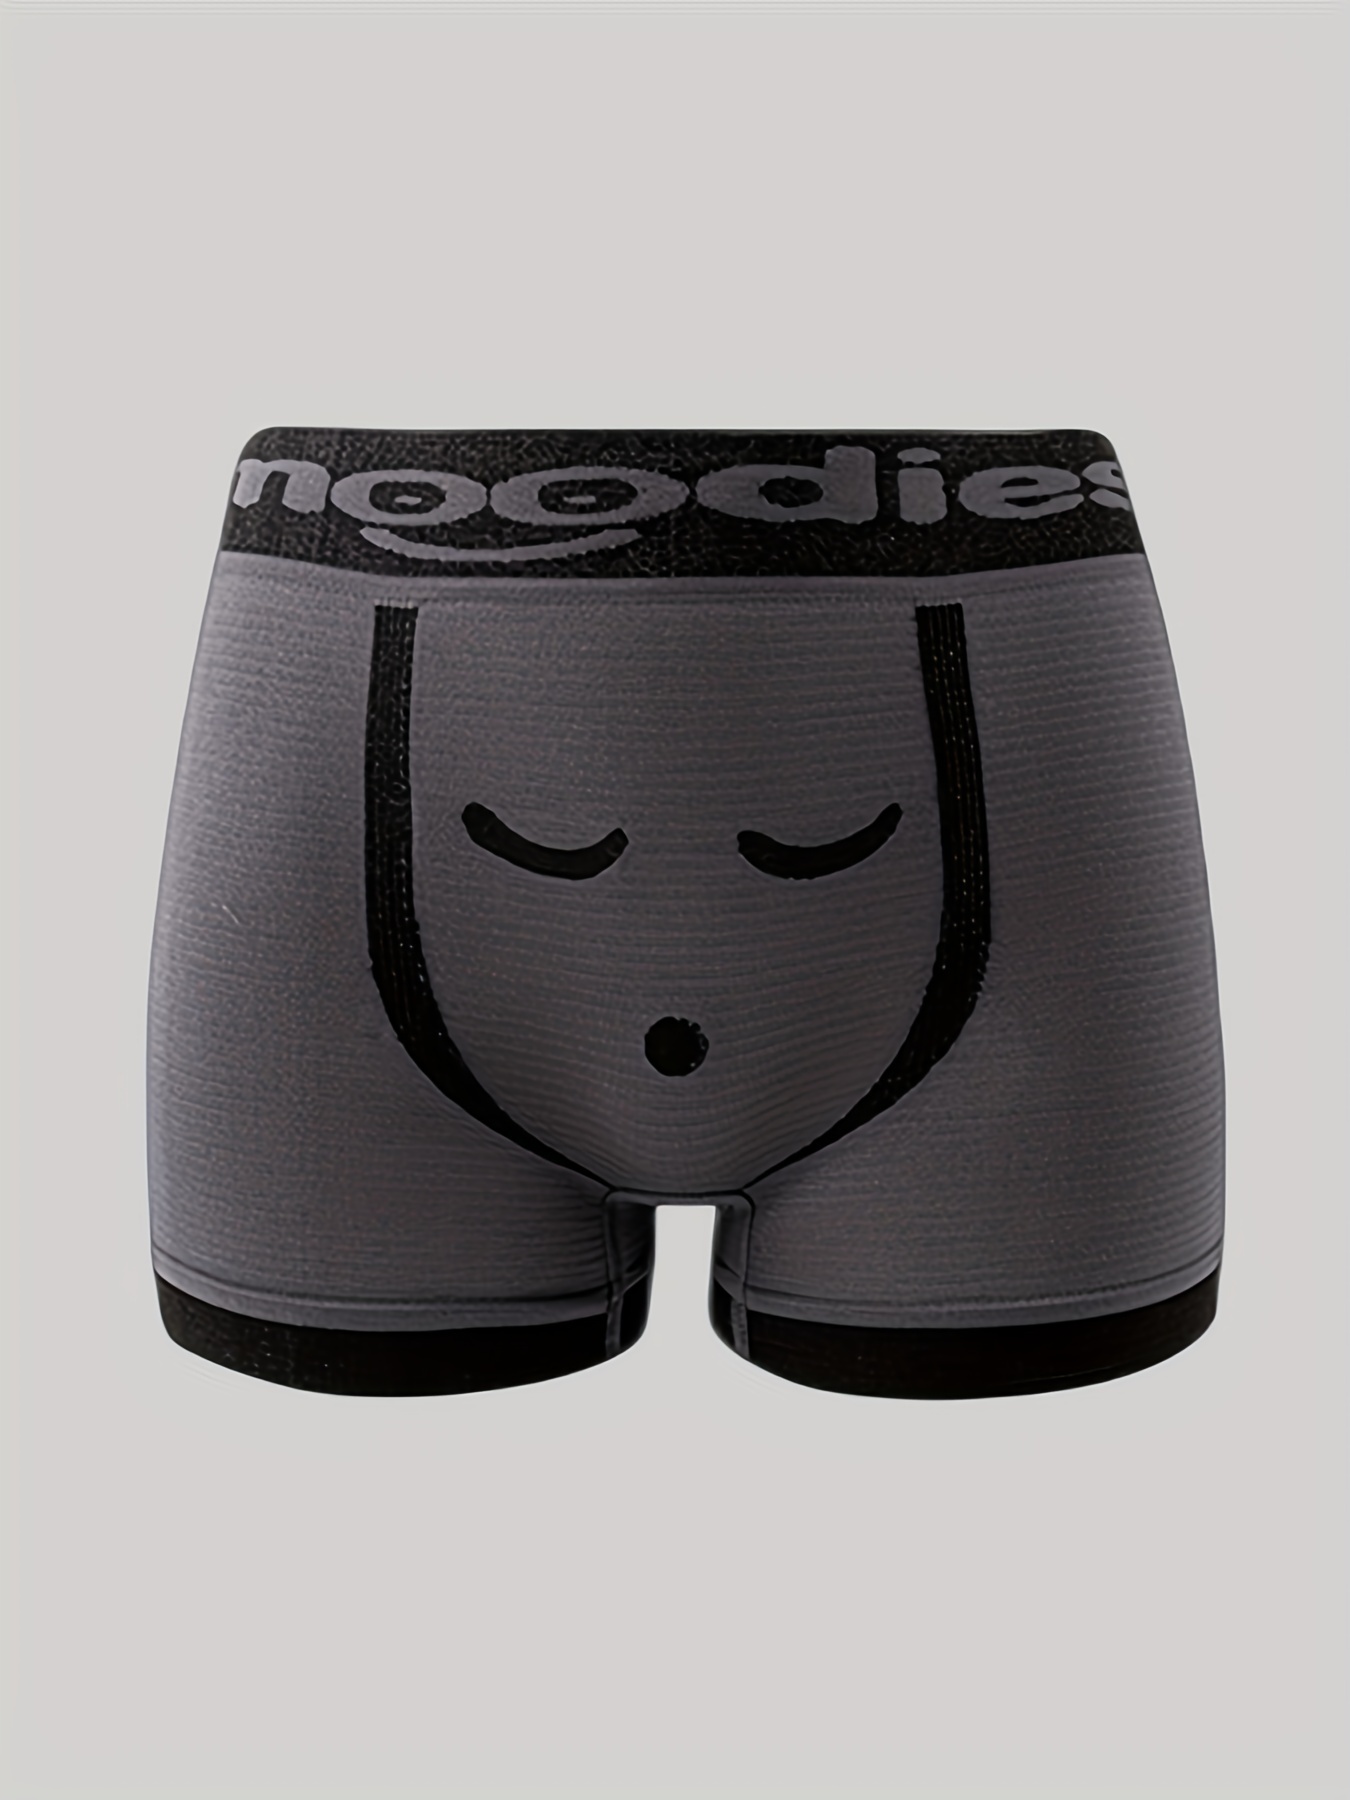 1 3pcs mens emotional face breathable boxer brief soft comfortable underwear for man details 10